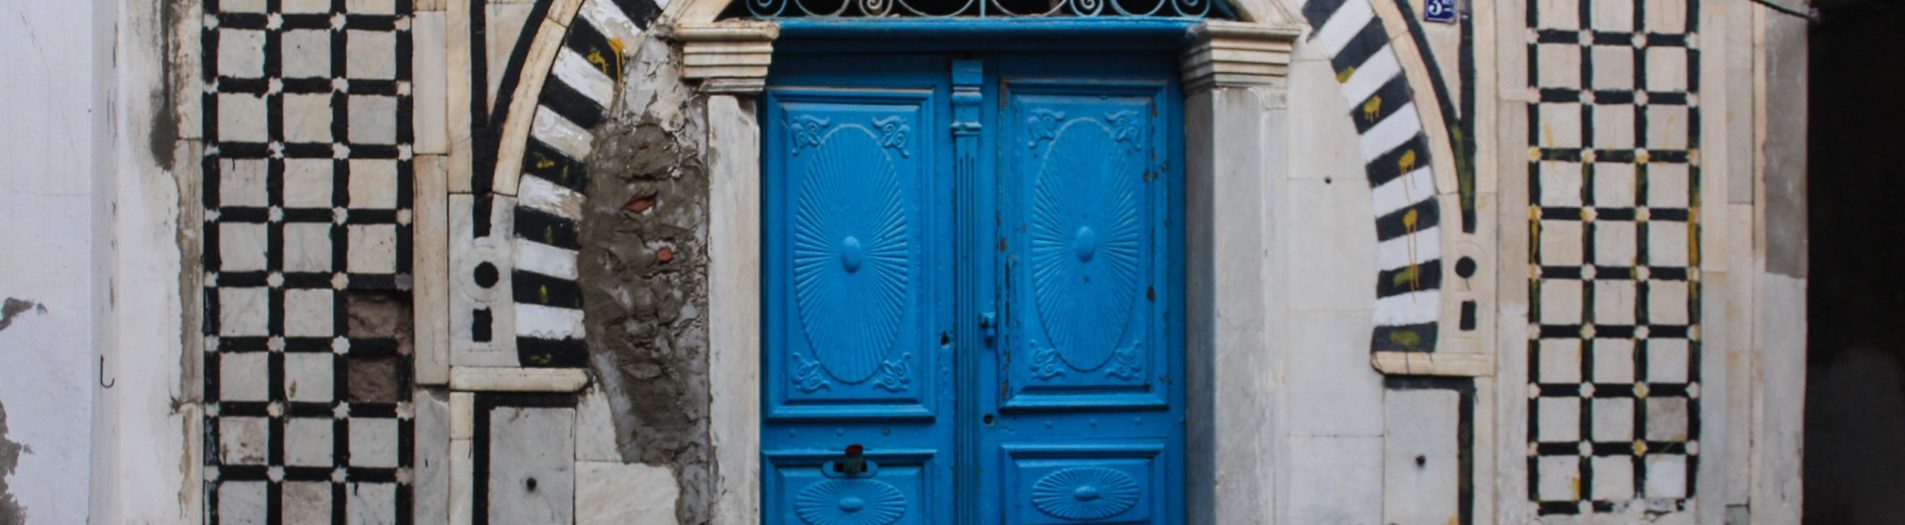 Les portes de la médina de Tunis ابواب مدينة تونس